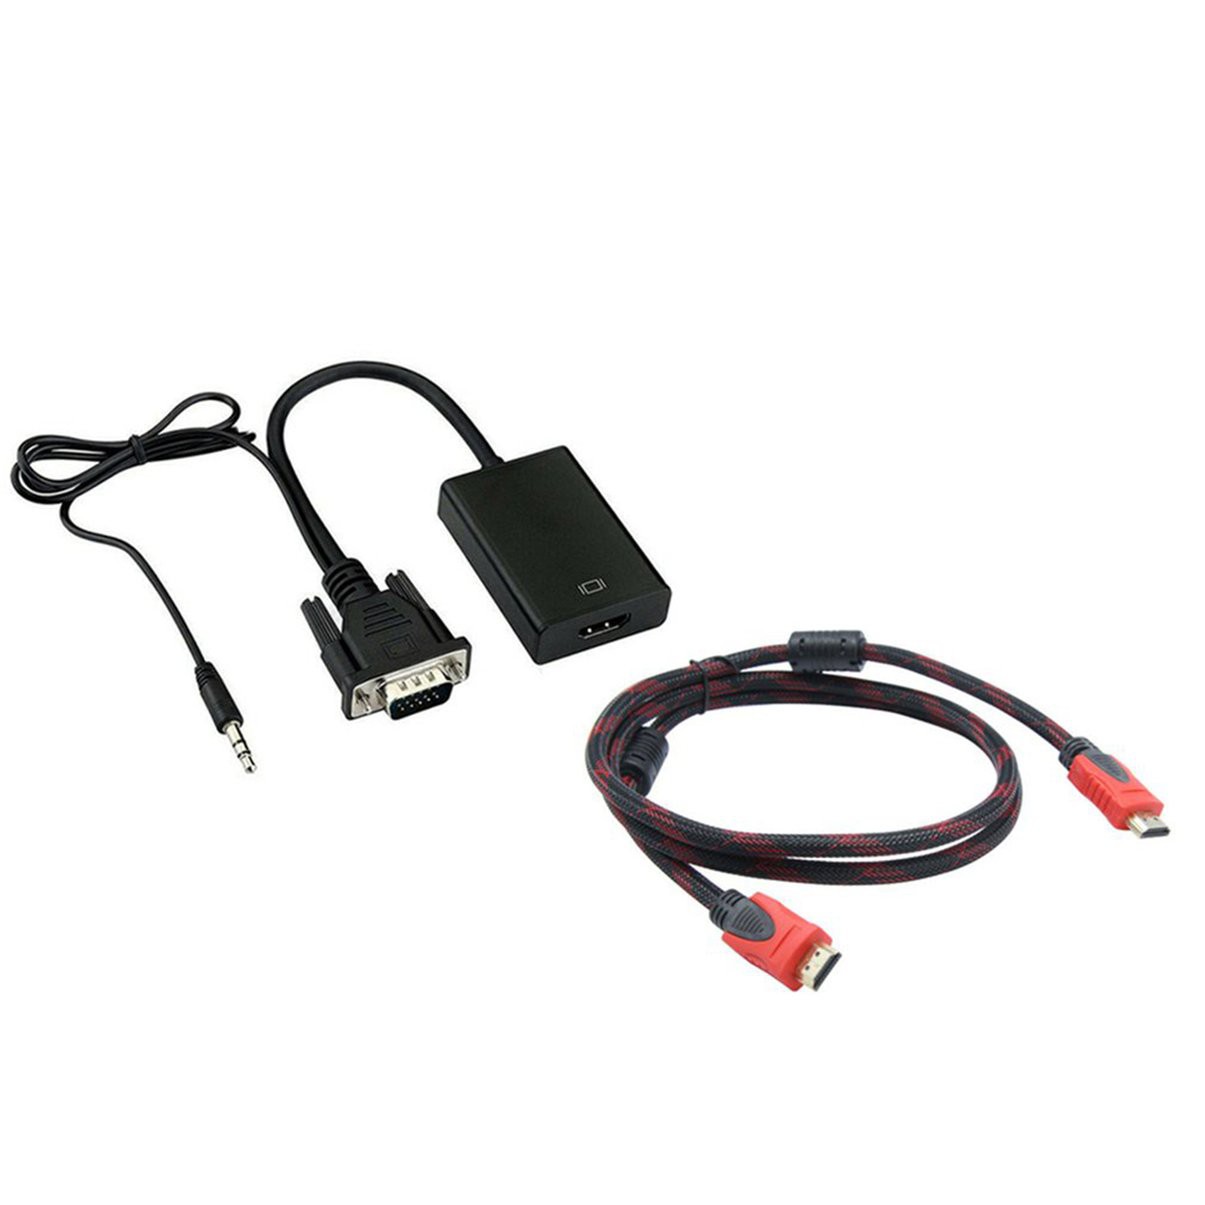 VGA to HDMI high-definition video and audio converter  Converts analog signal (VGA ) to digital signal (HDMI )